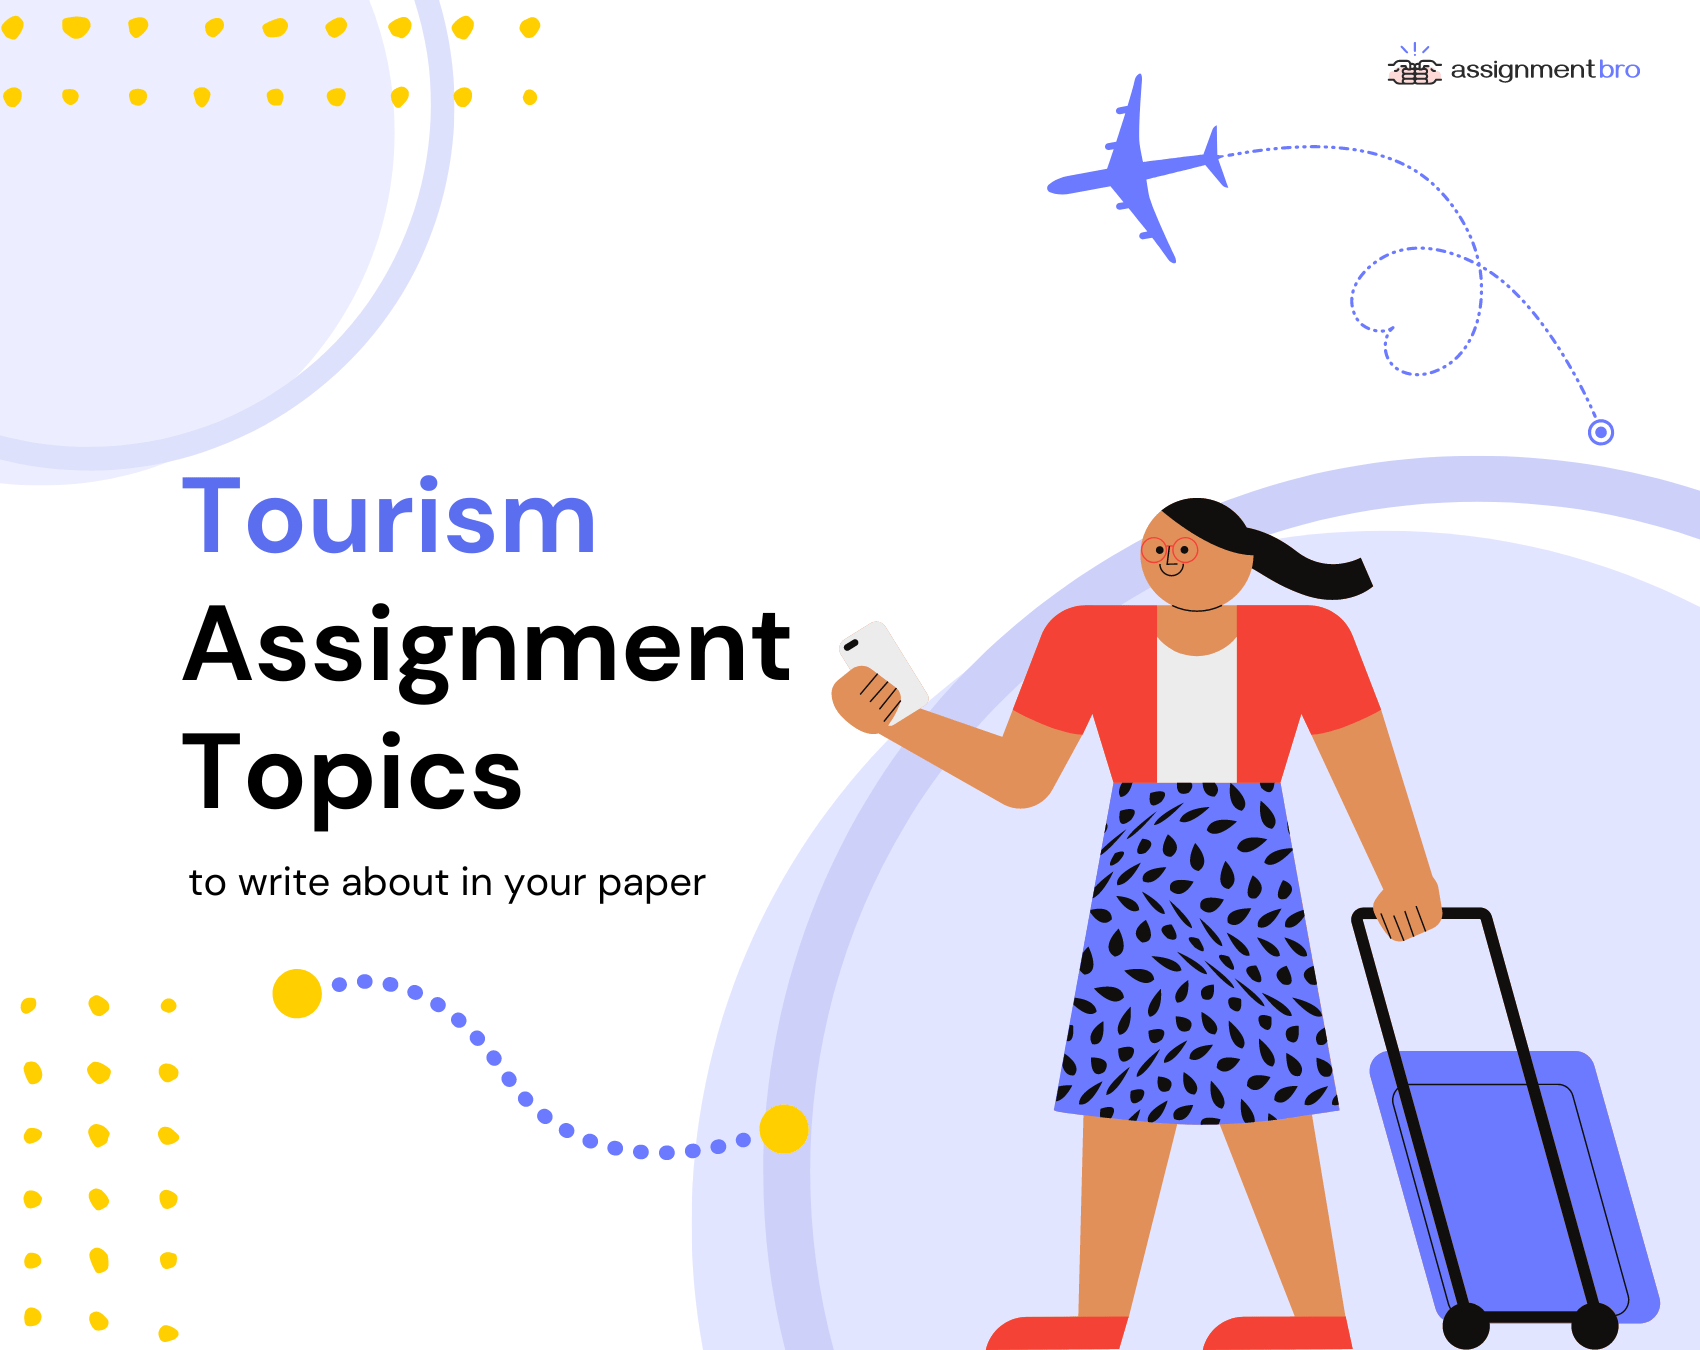 Tourism Assignment Topics